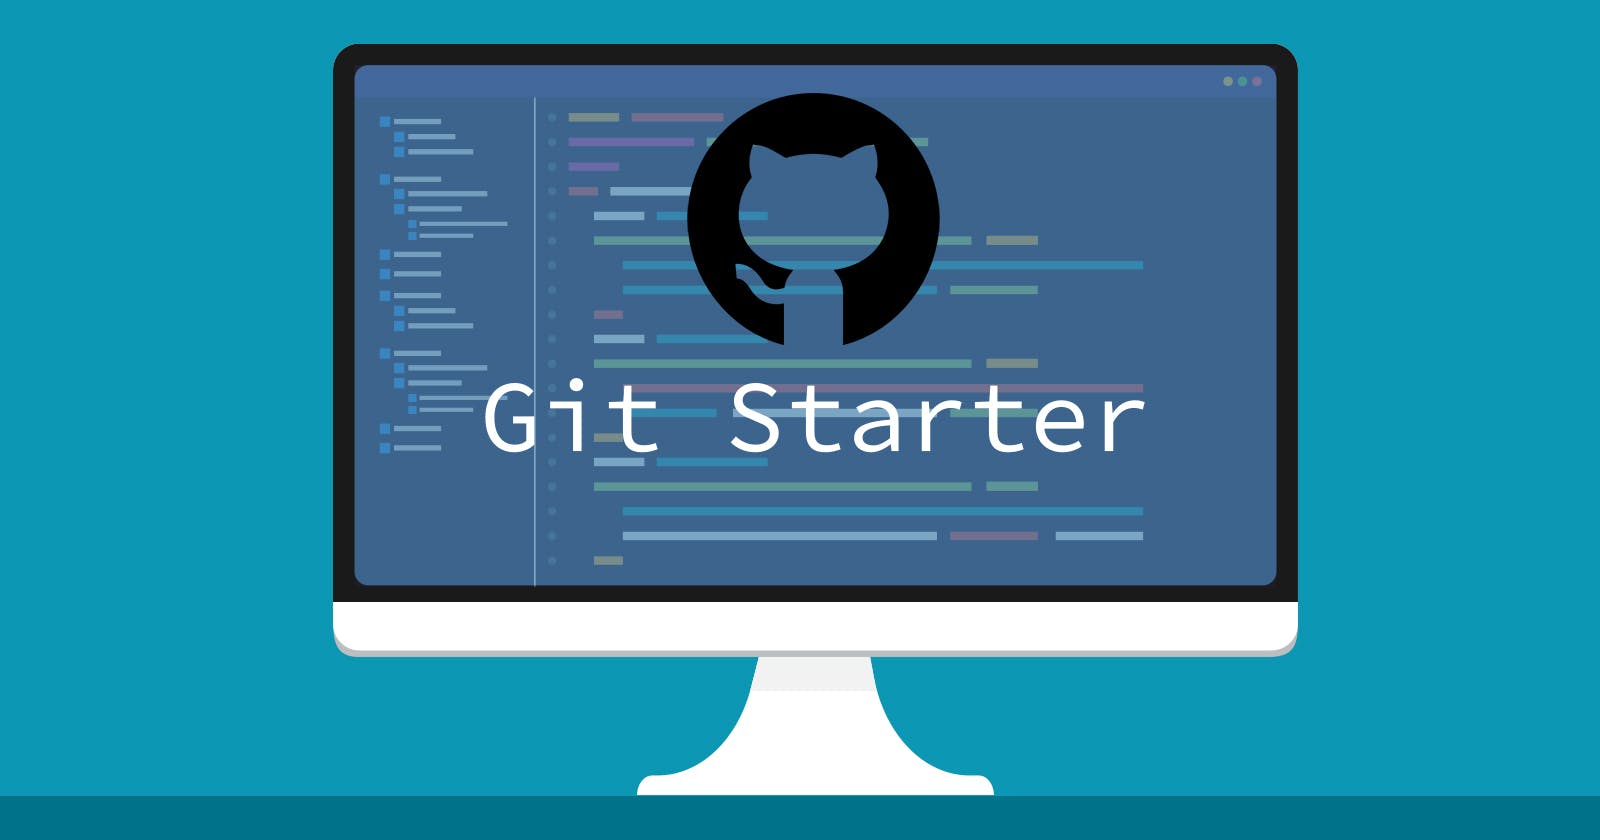 Get Start with Git and GitHub